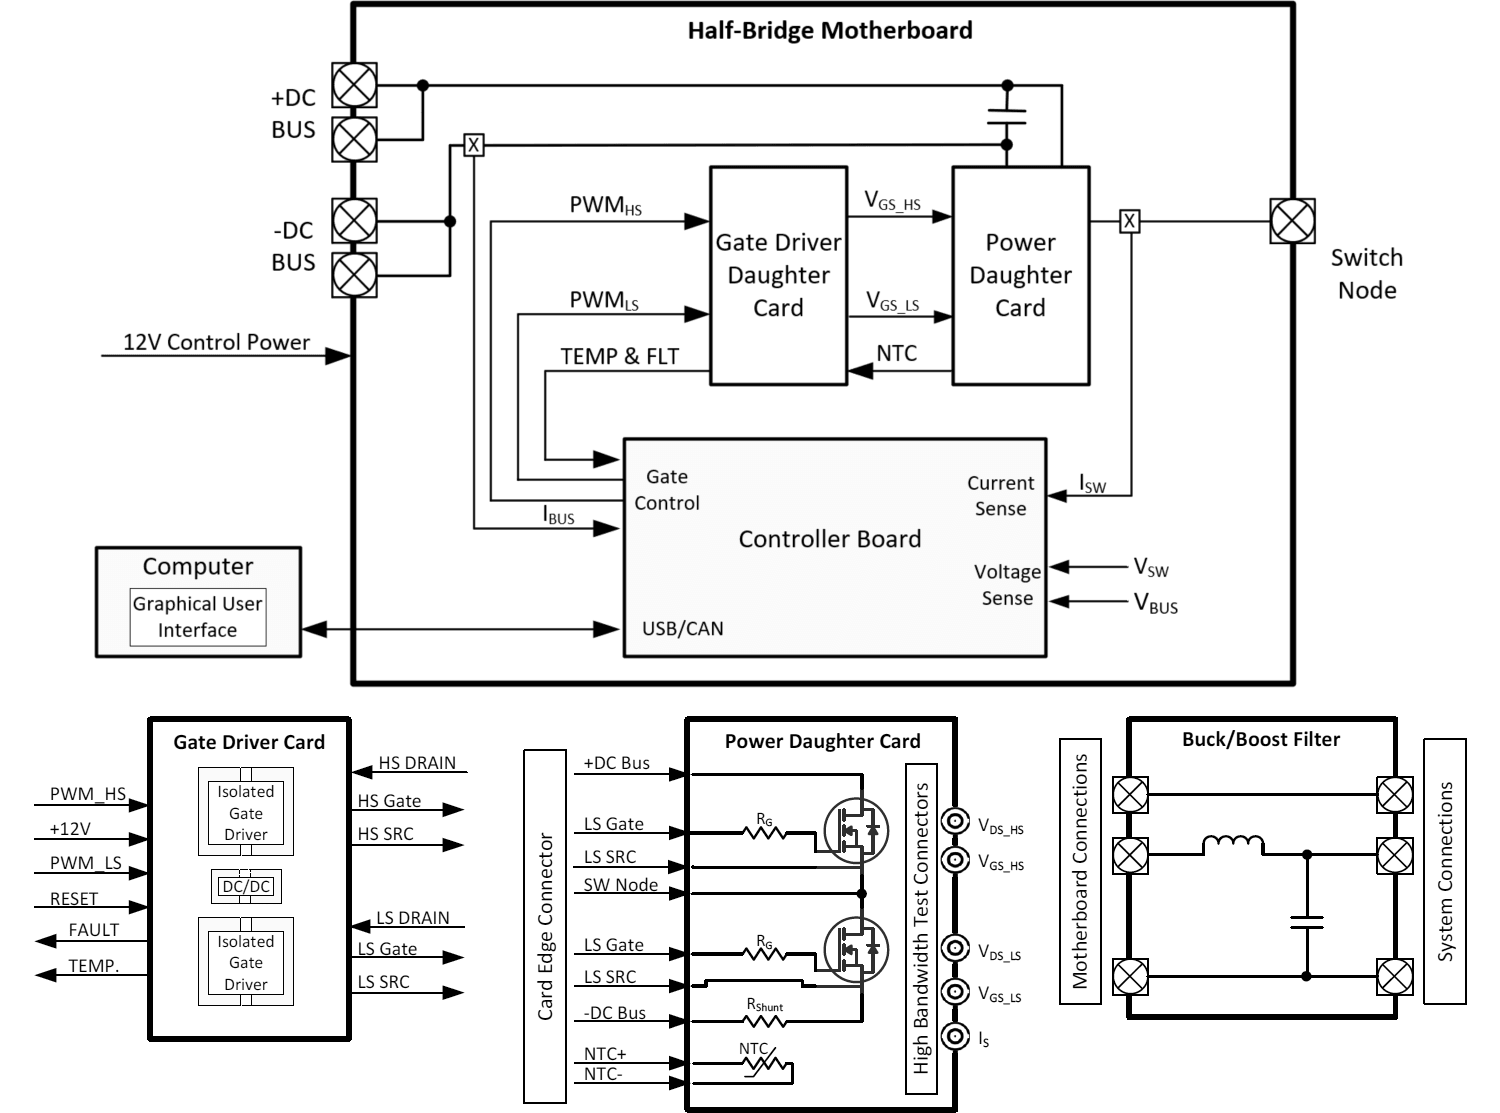 Block diagram of the circuit design of the Half-Bridge Motherboard used in Wolfspeed's SpeedVal Kit modular evaluation platform.